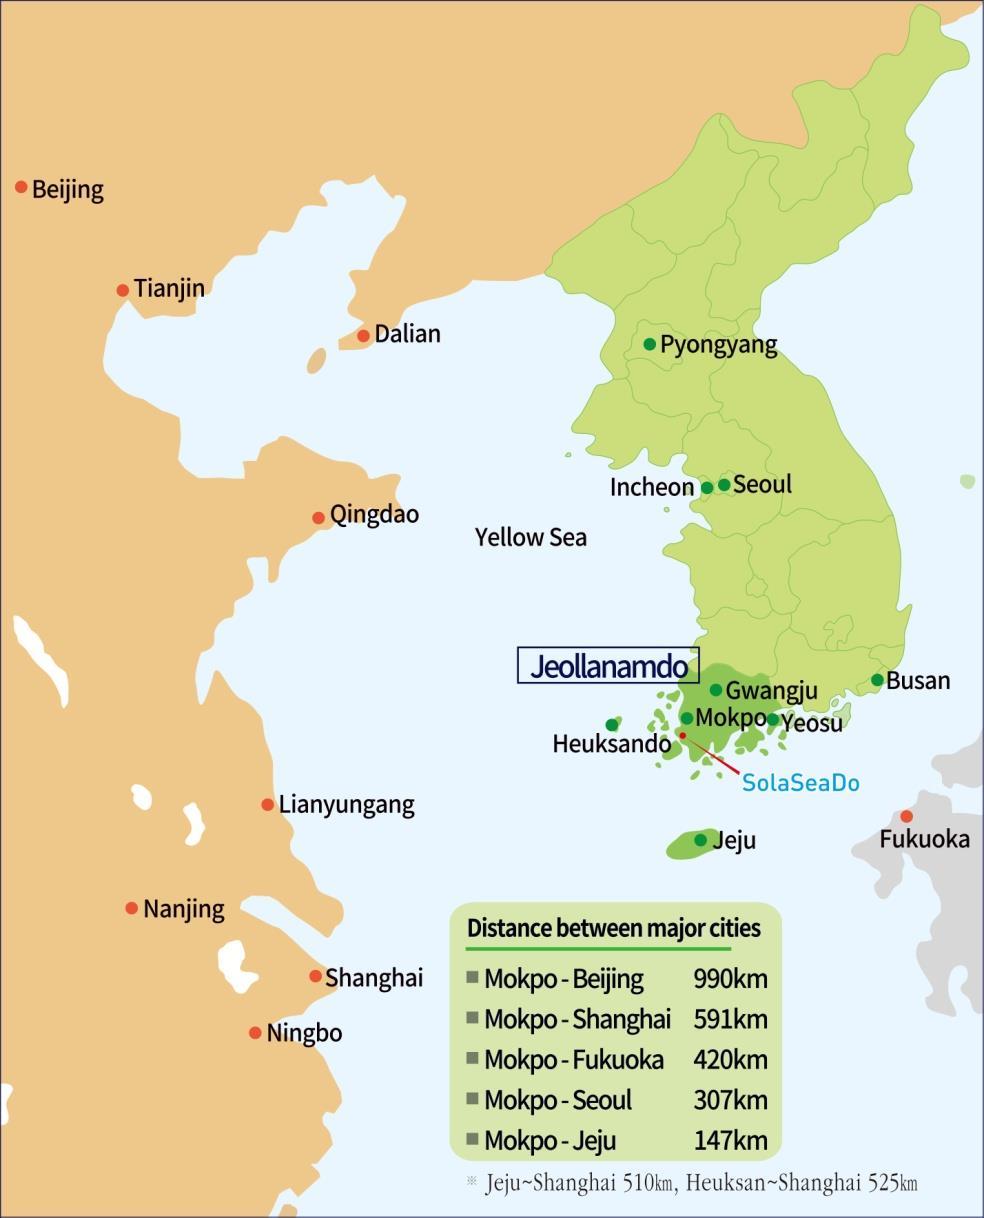 Geographical Conditions Northeast Asia Center Geographically located in the center of Northeast Asia. Shanghai 591 km, Fukuoka 420 km.